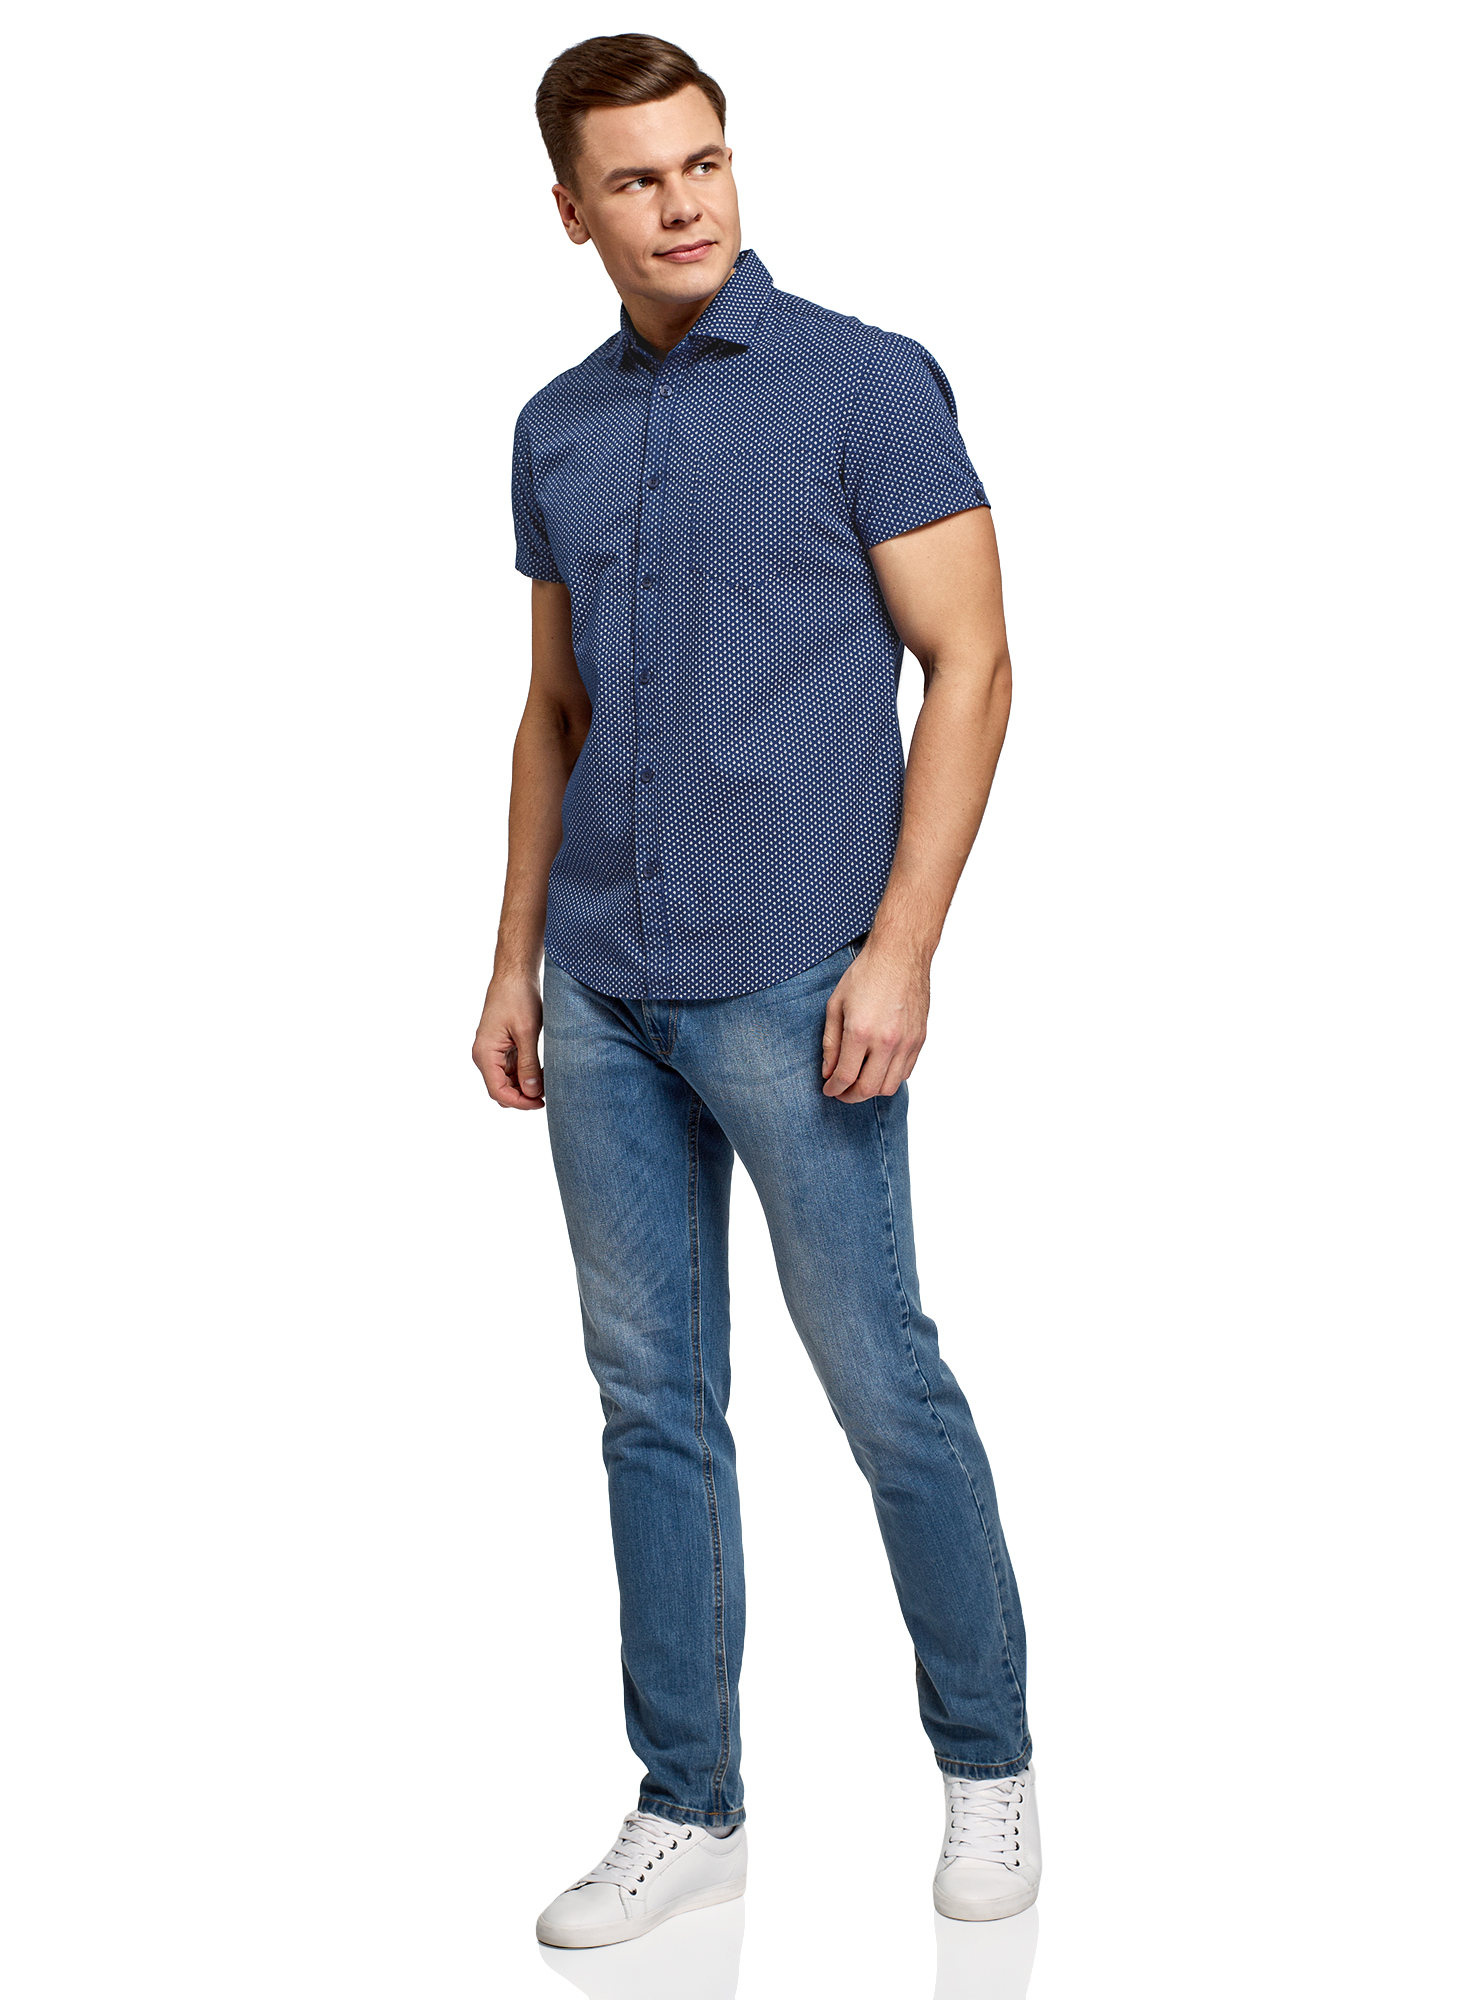 Рубашка мужская oodji 3L410155M синяя S